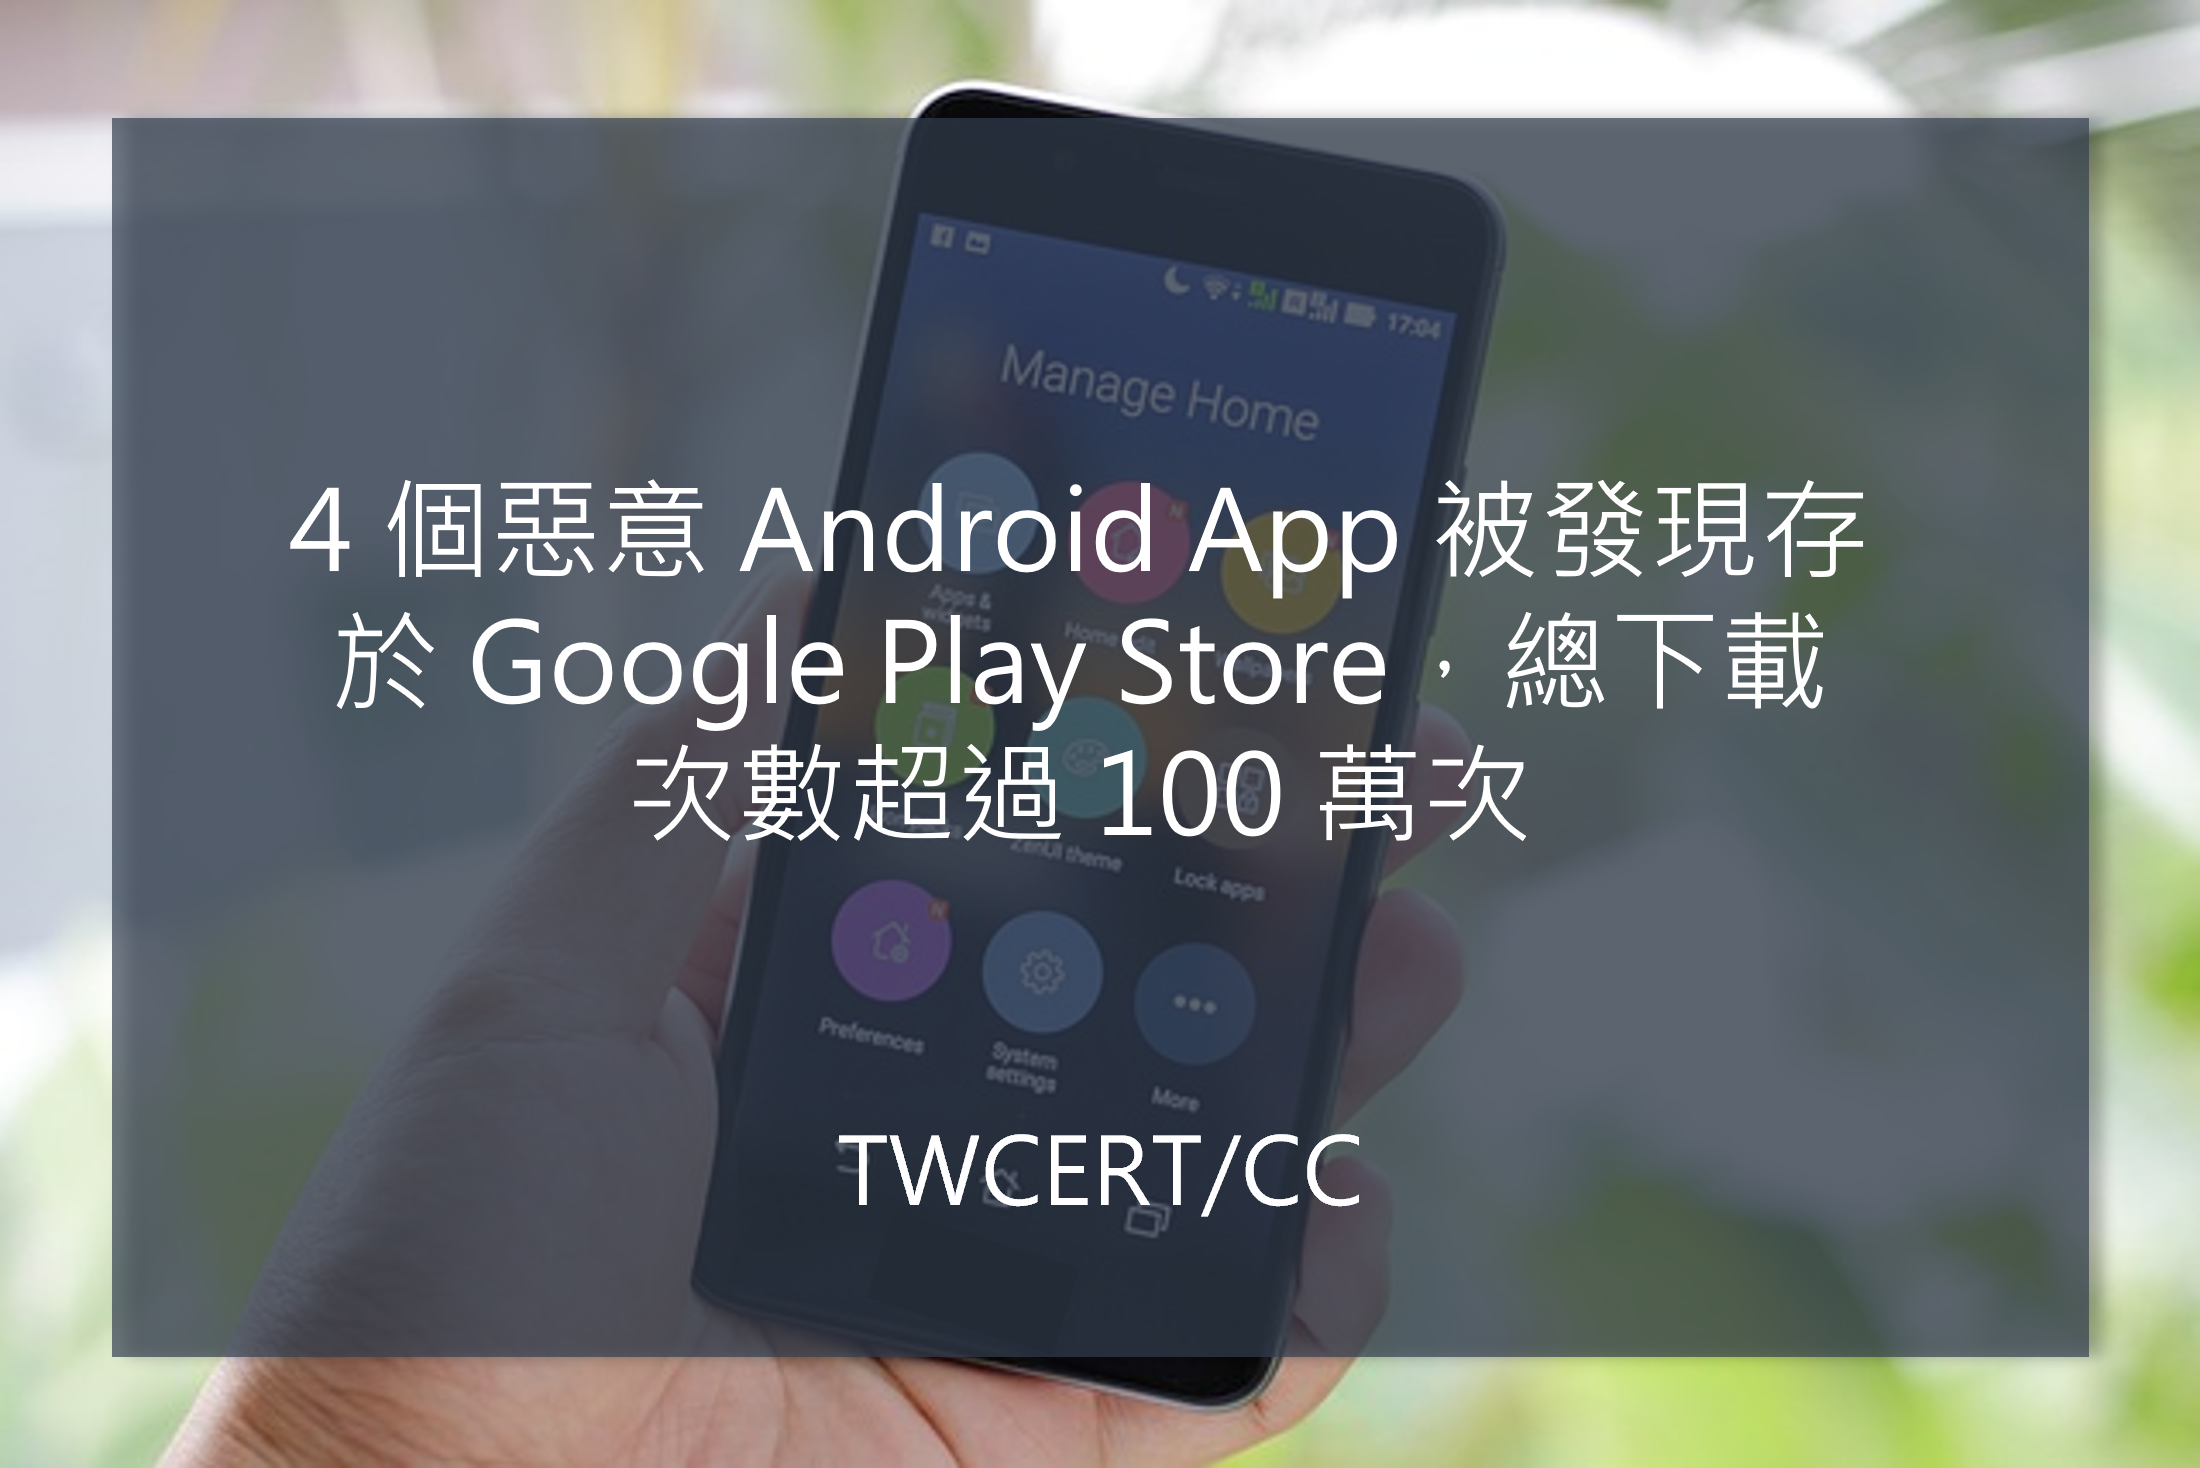 4 個惡意 Android App 被發現存於 Google Play Store，總下載次數超過 100 萬次 TWCERT/CC